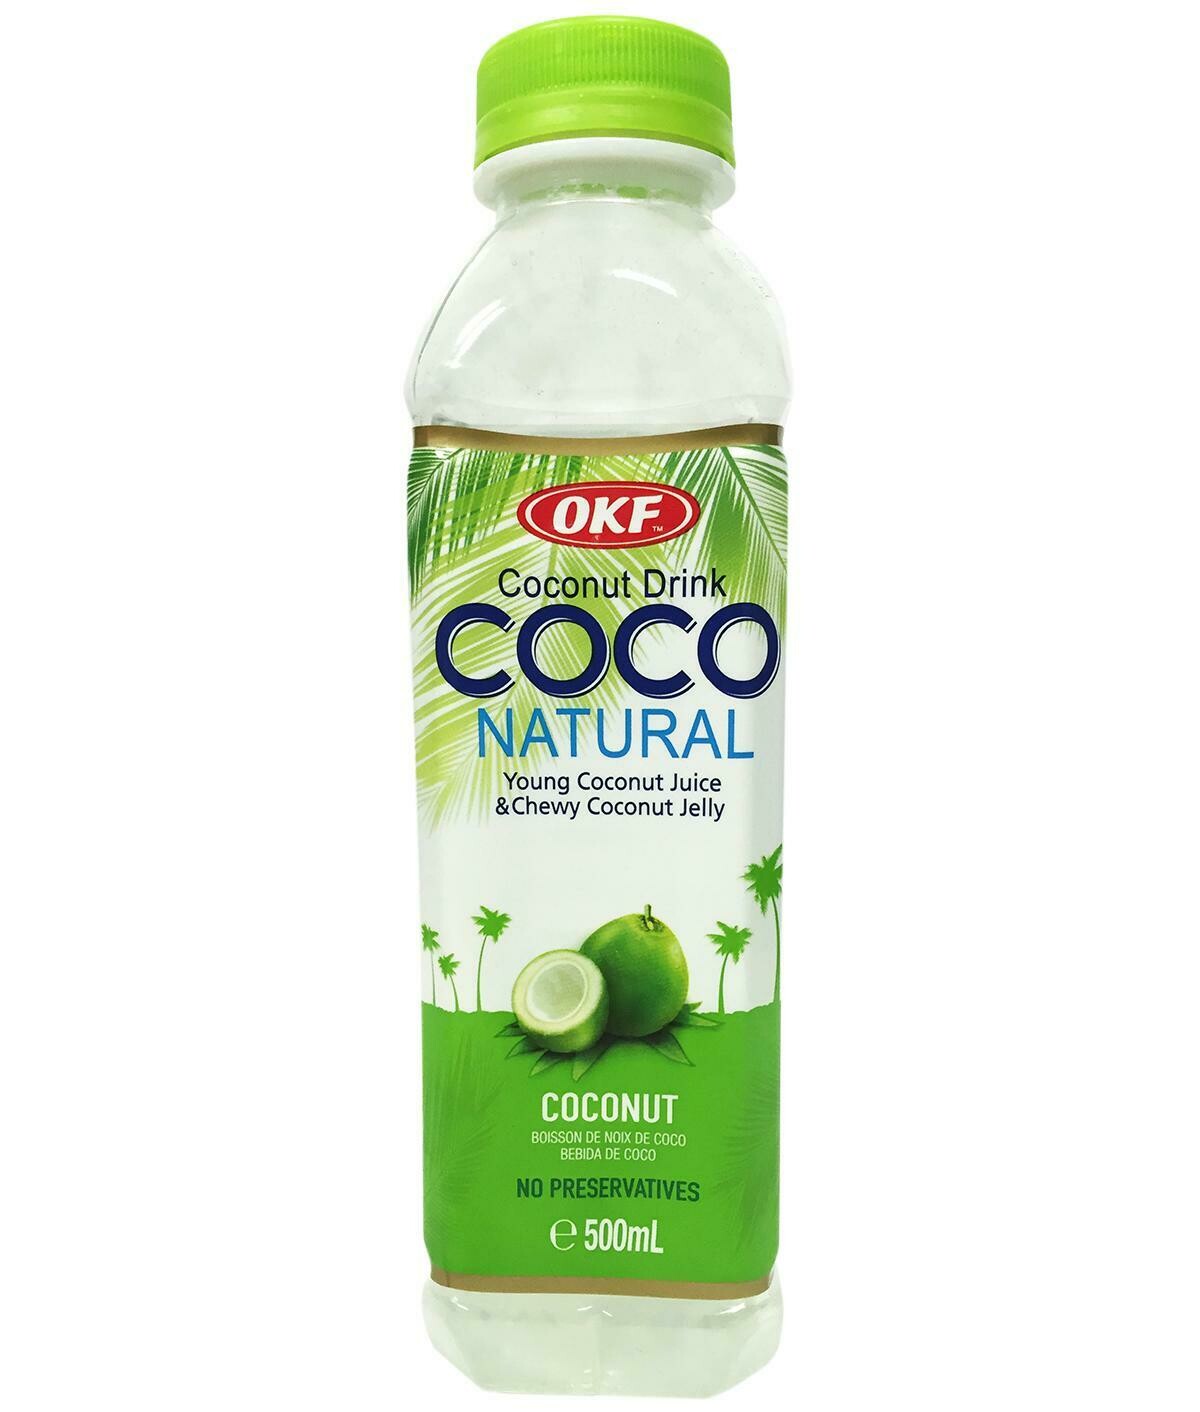 Coco drink